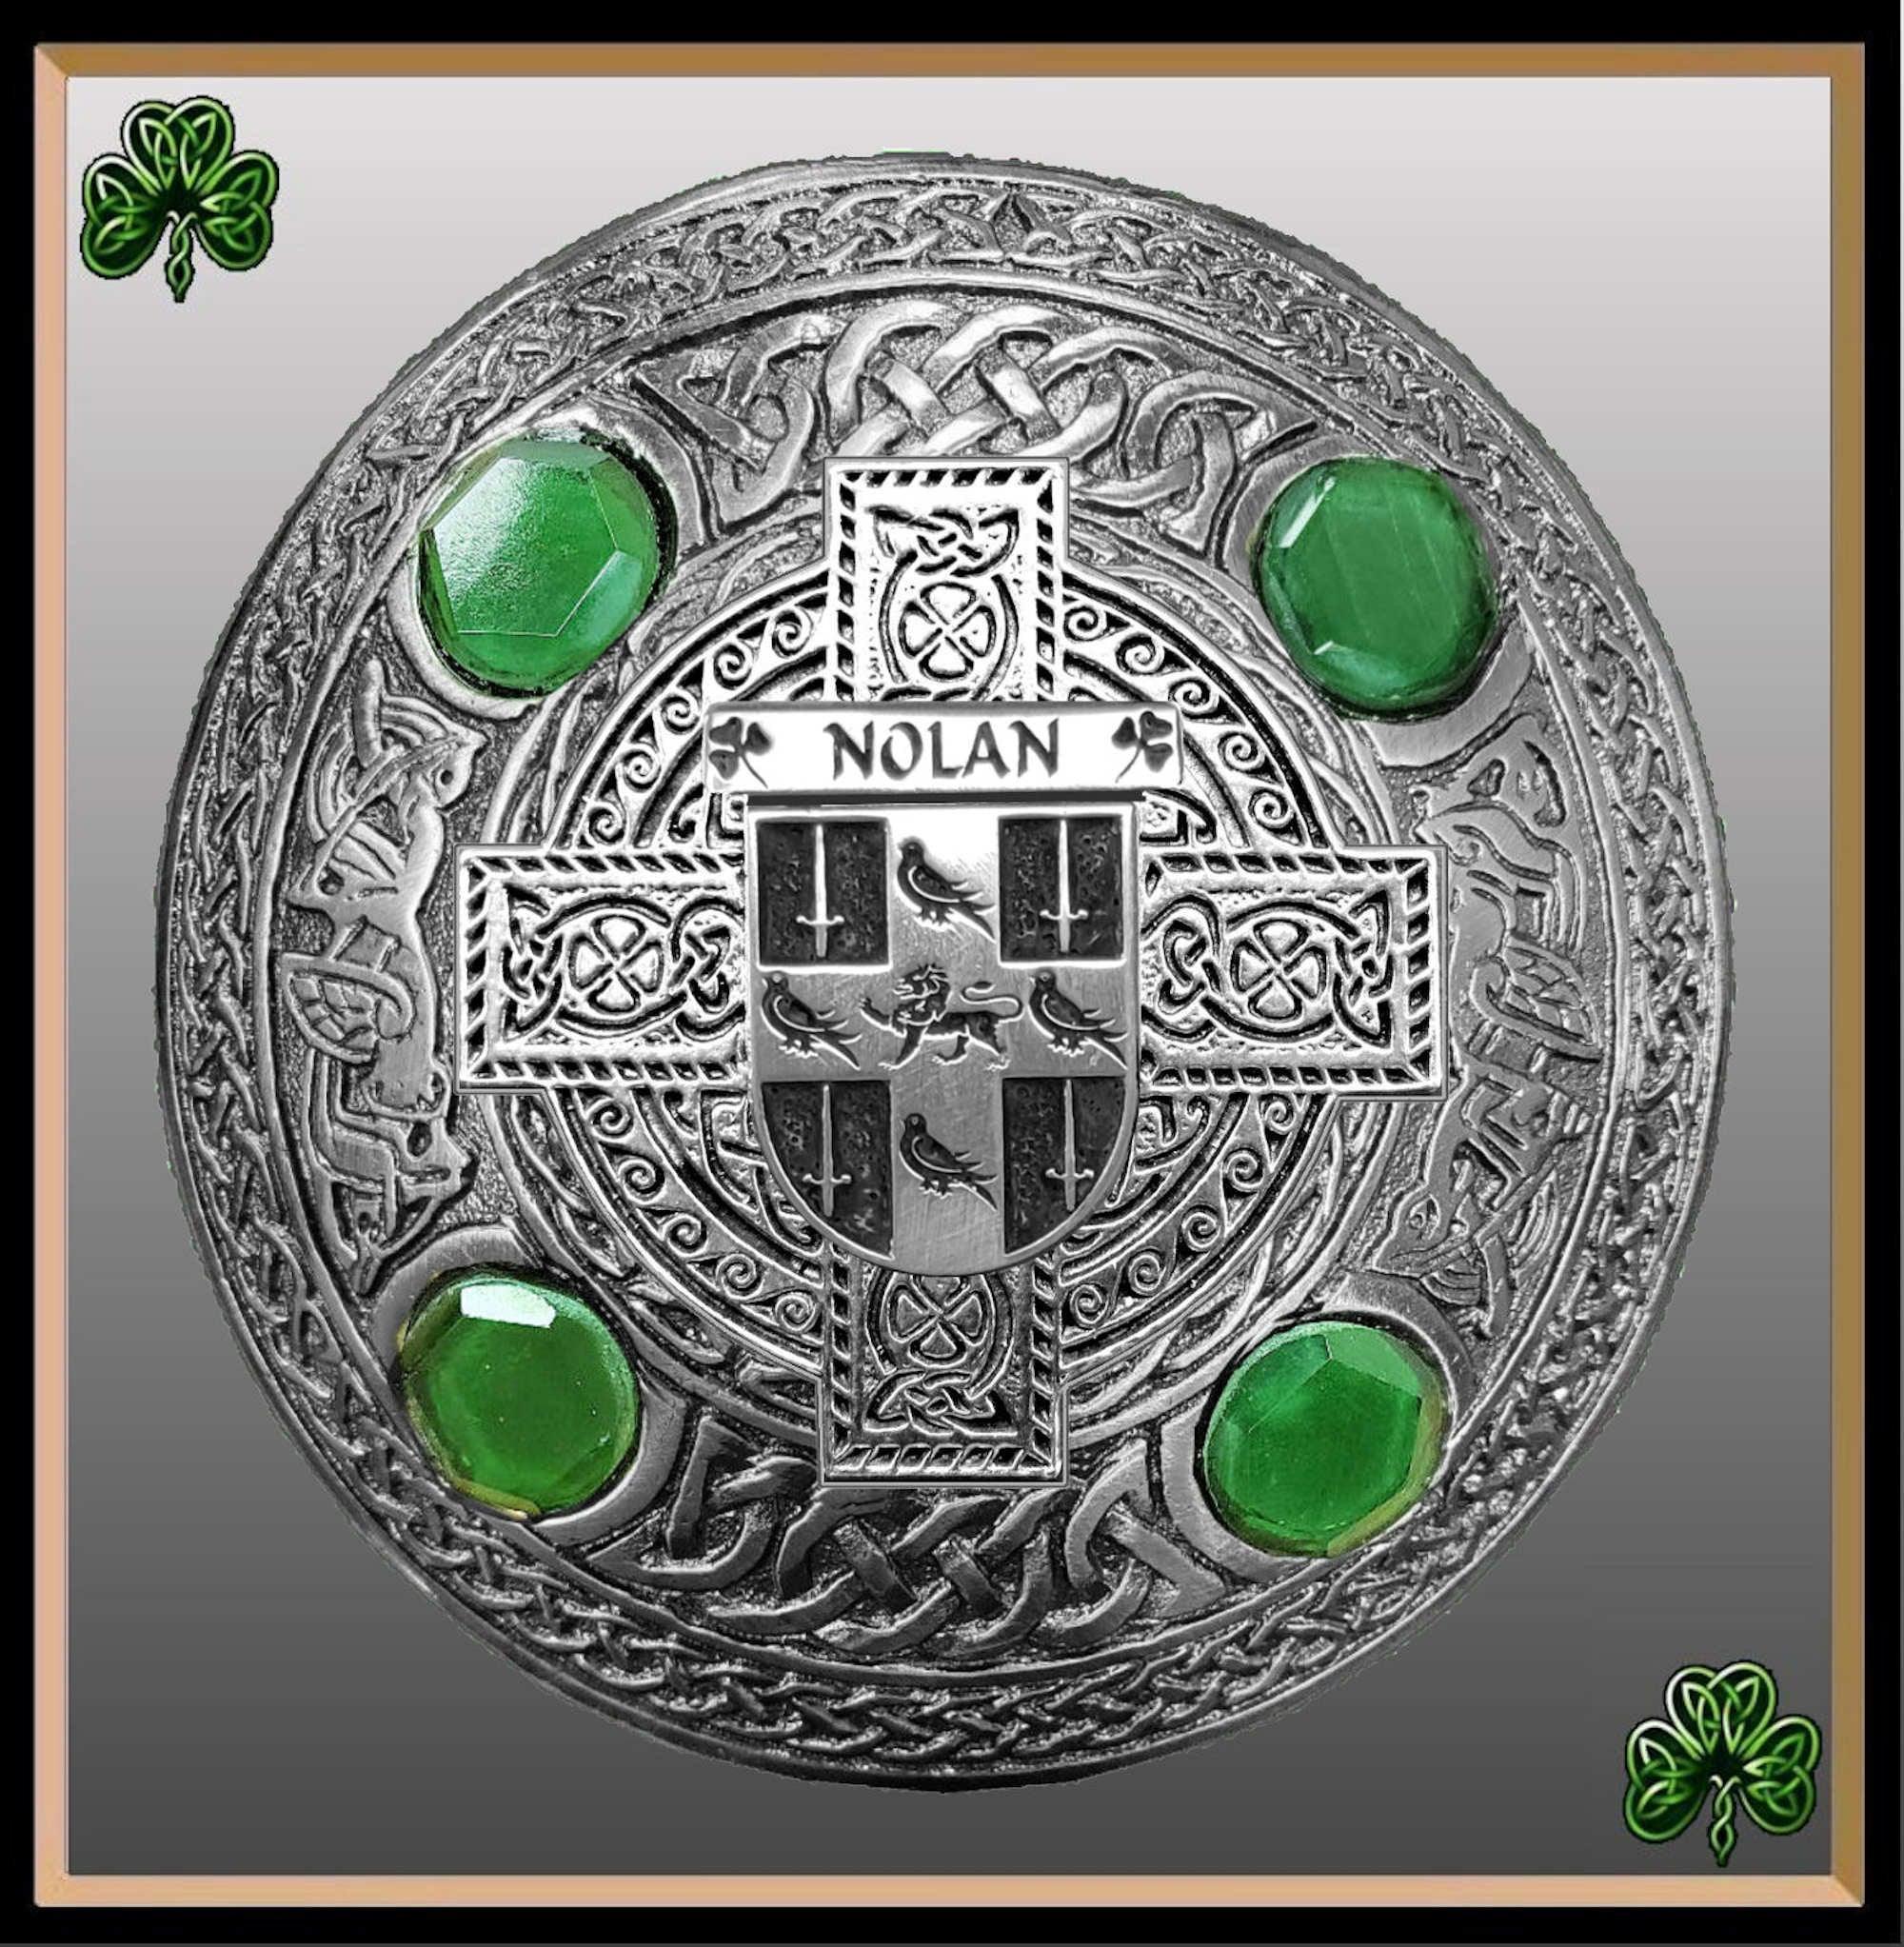 Nolan Irish Coat of Arms Celtic Cross Plaid Brooch with Green Stones